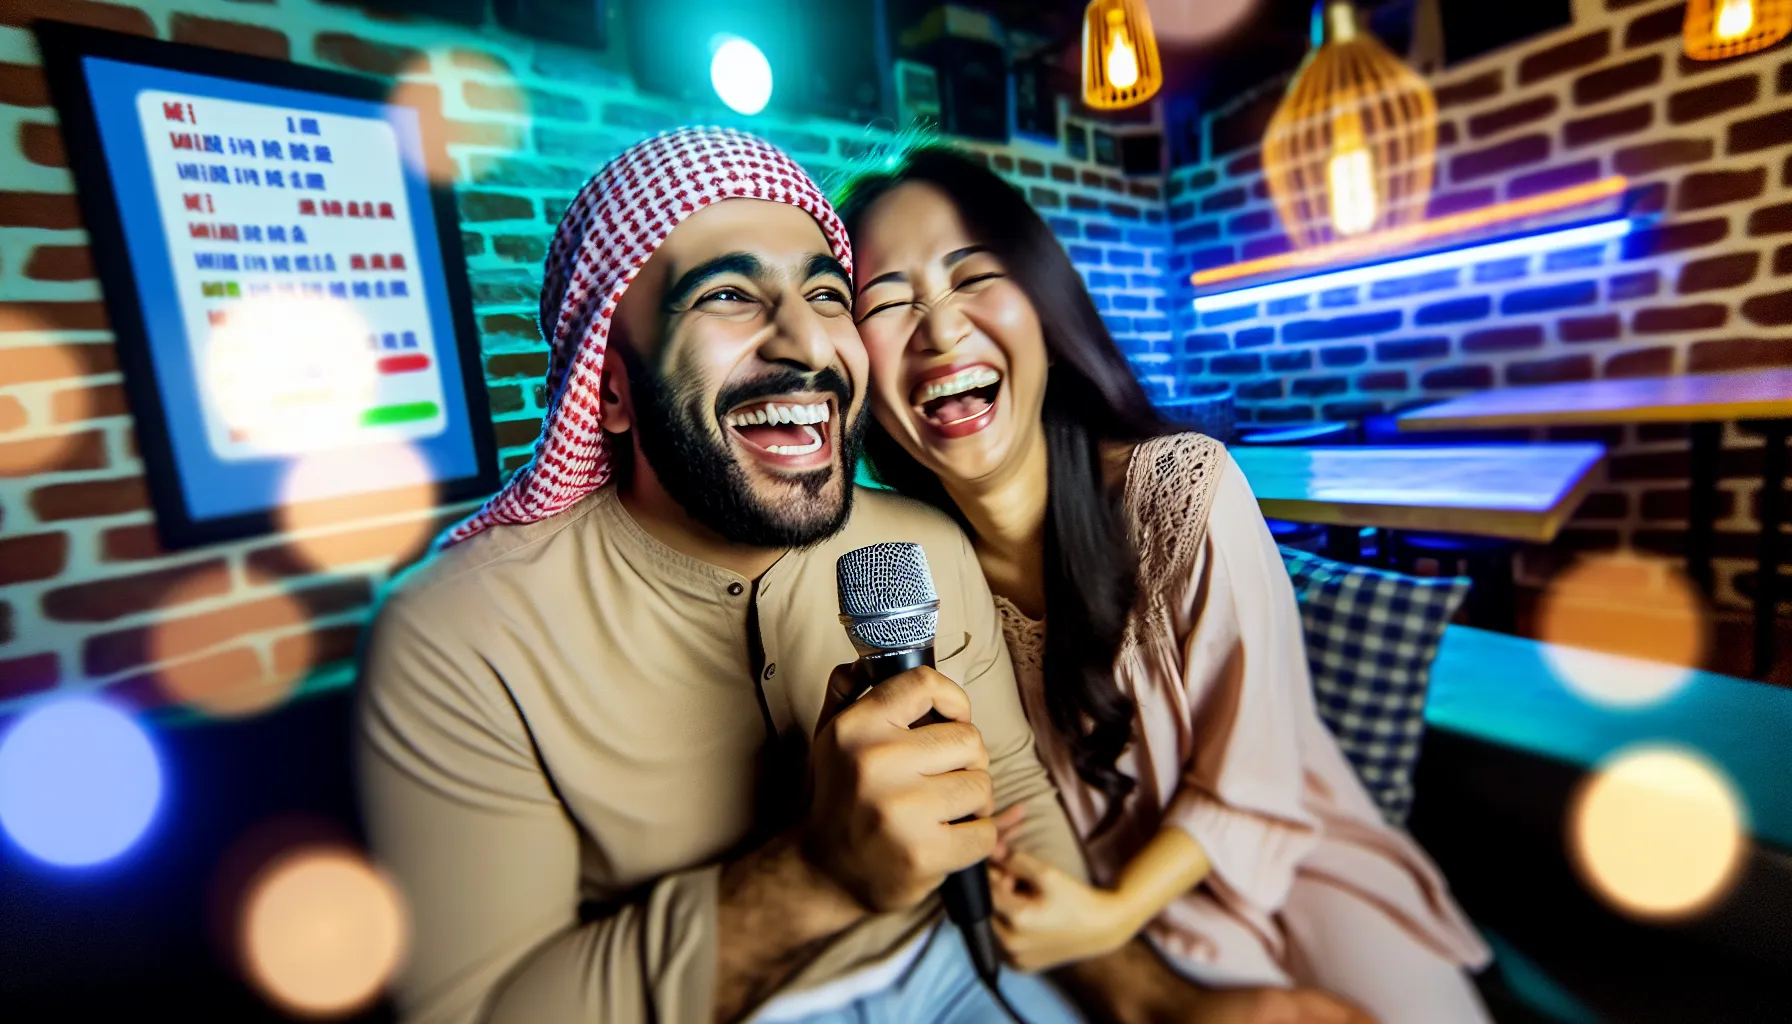 A couple singing karaoke